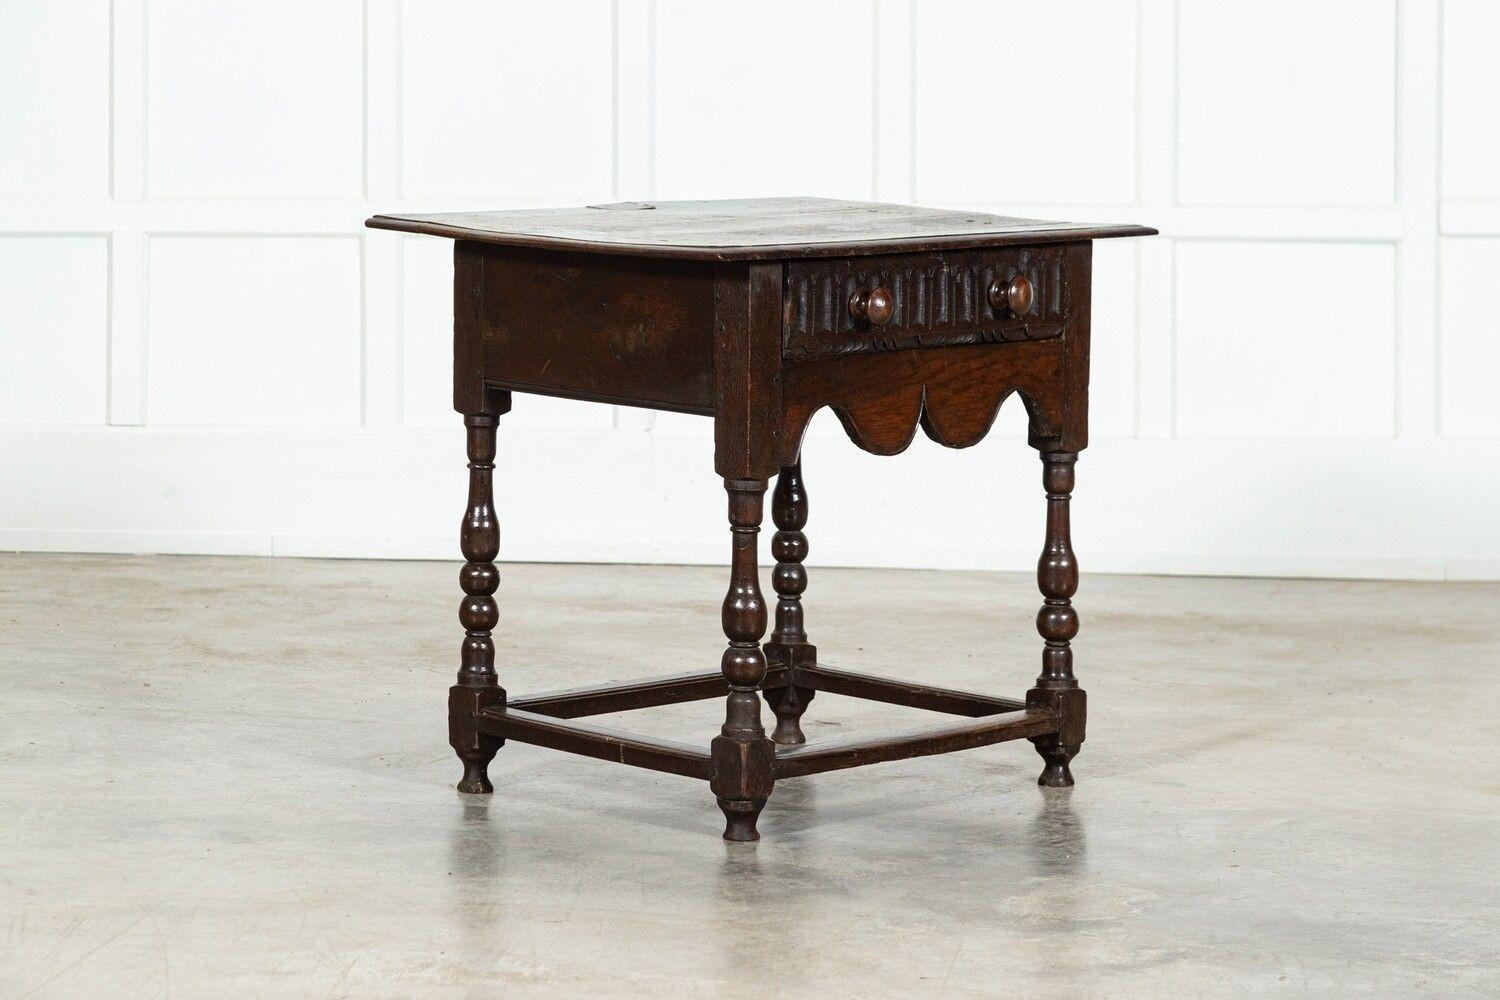 circa 1800
Early 19thC English Vernacular Oak Hall Table
sku 1762
W77 x D57 x H58 cm
Weight 18 Kg